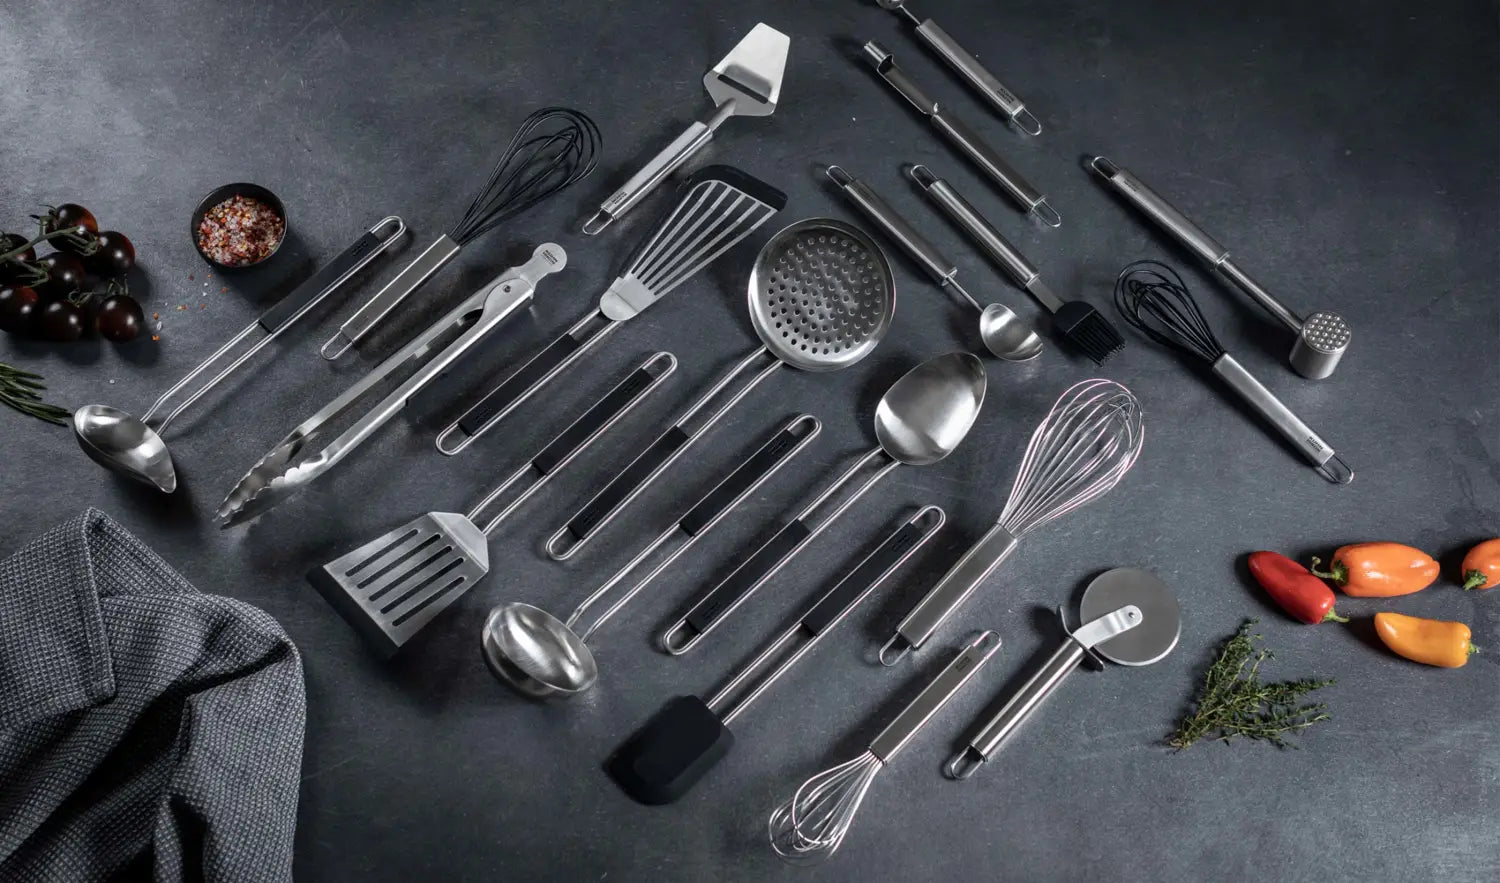 Under Review: Kuhn Rikon Essentials – Art of Living Cookshop